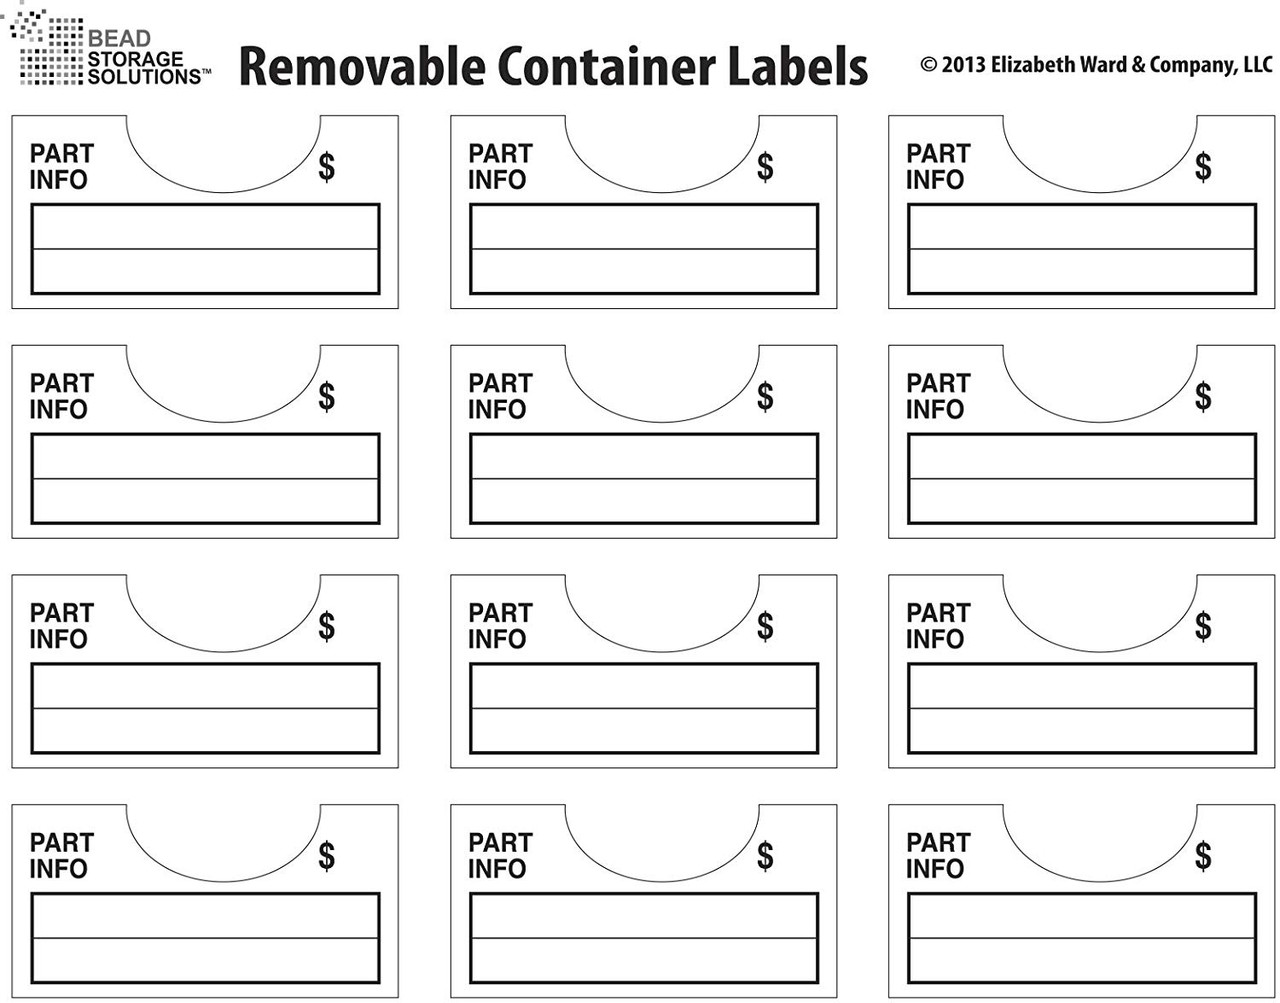 Darice 96-Piece Elizabeth Ward Bead Storage Solutions Container Labels -  Simply Special Crafts